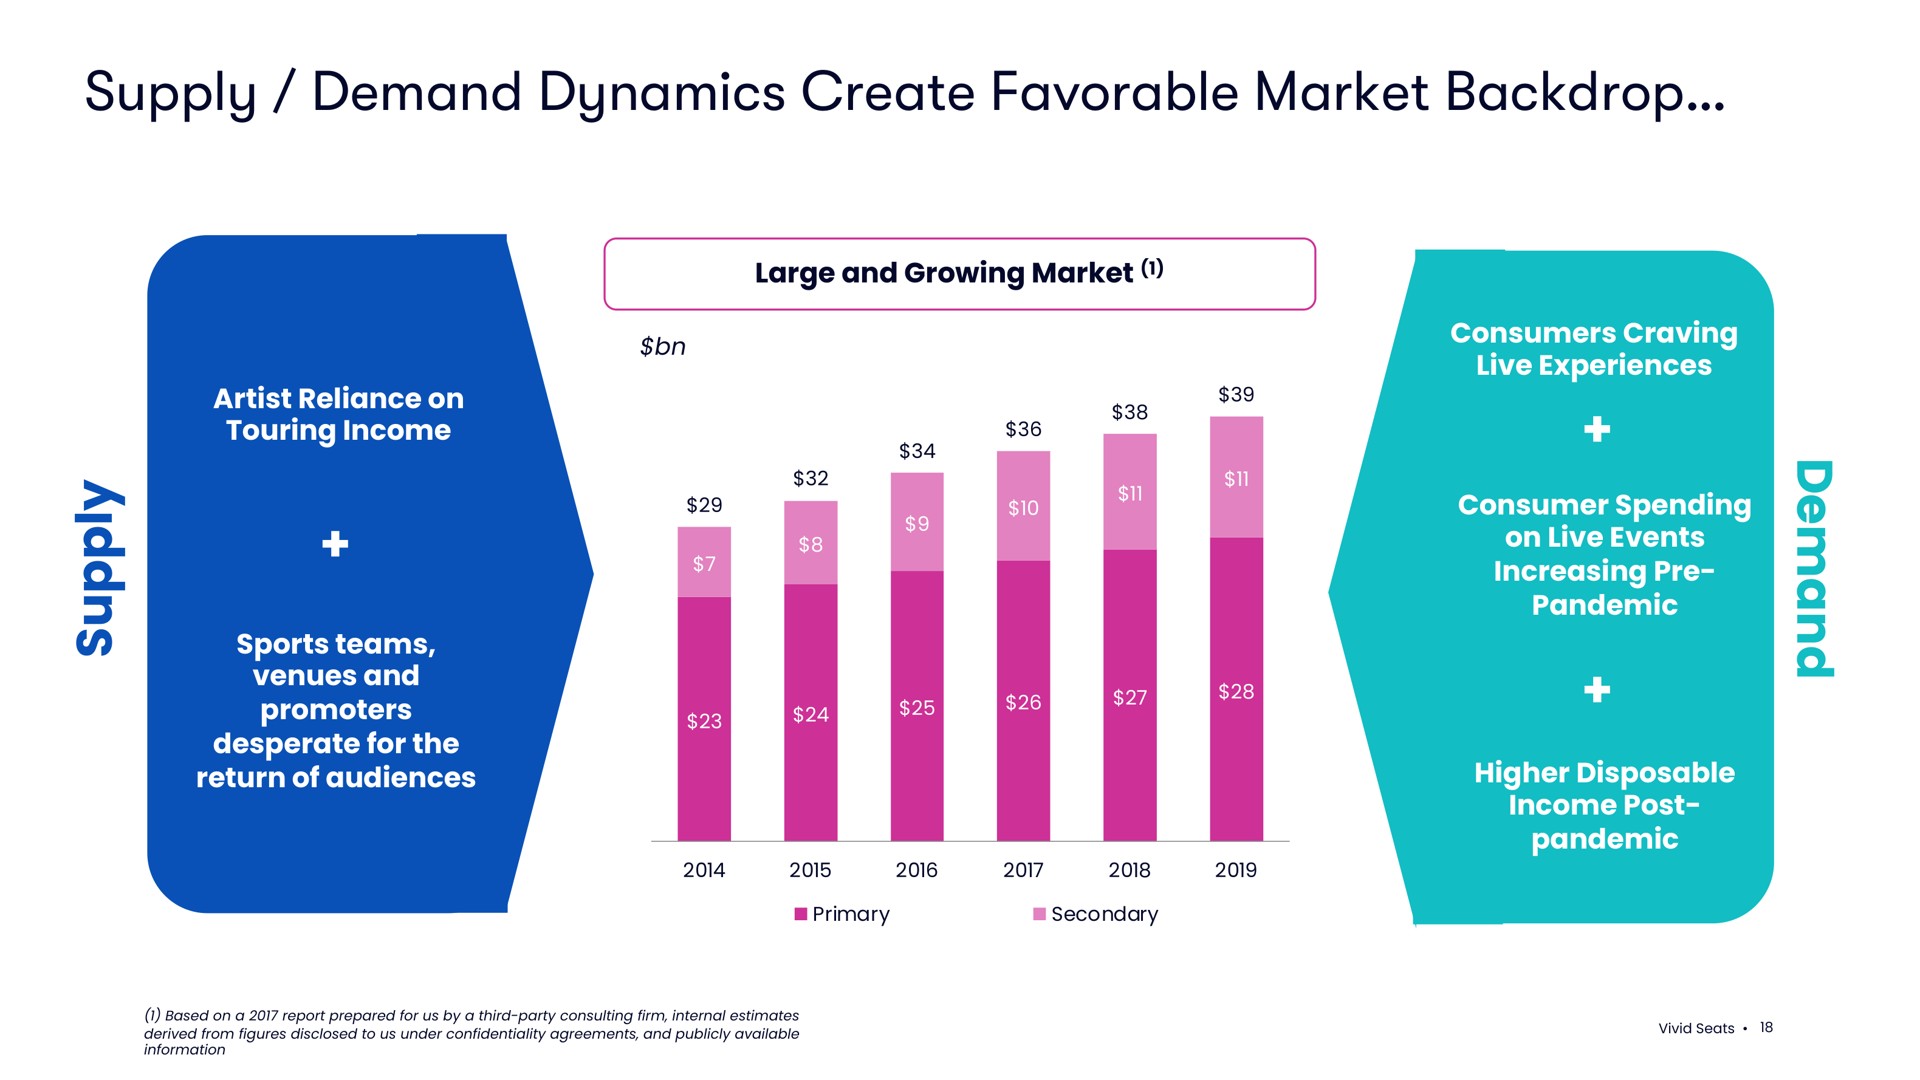 supply demand dynamics create favorable market backdrop | Vivid Seats